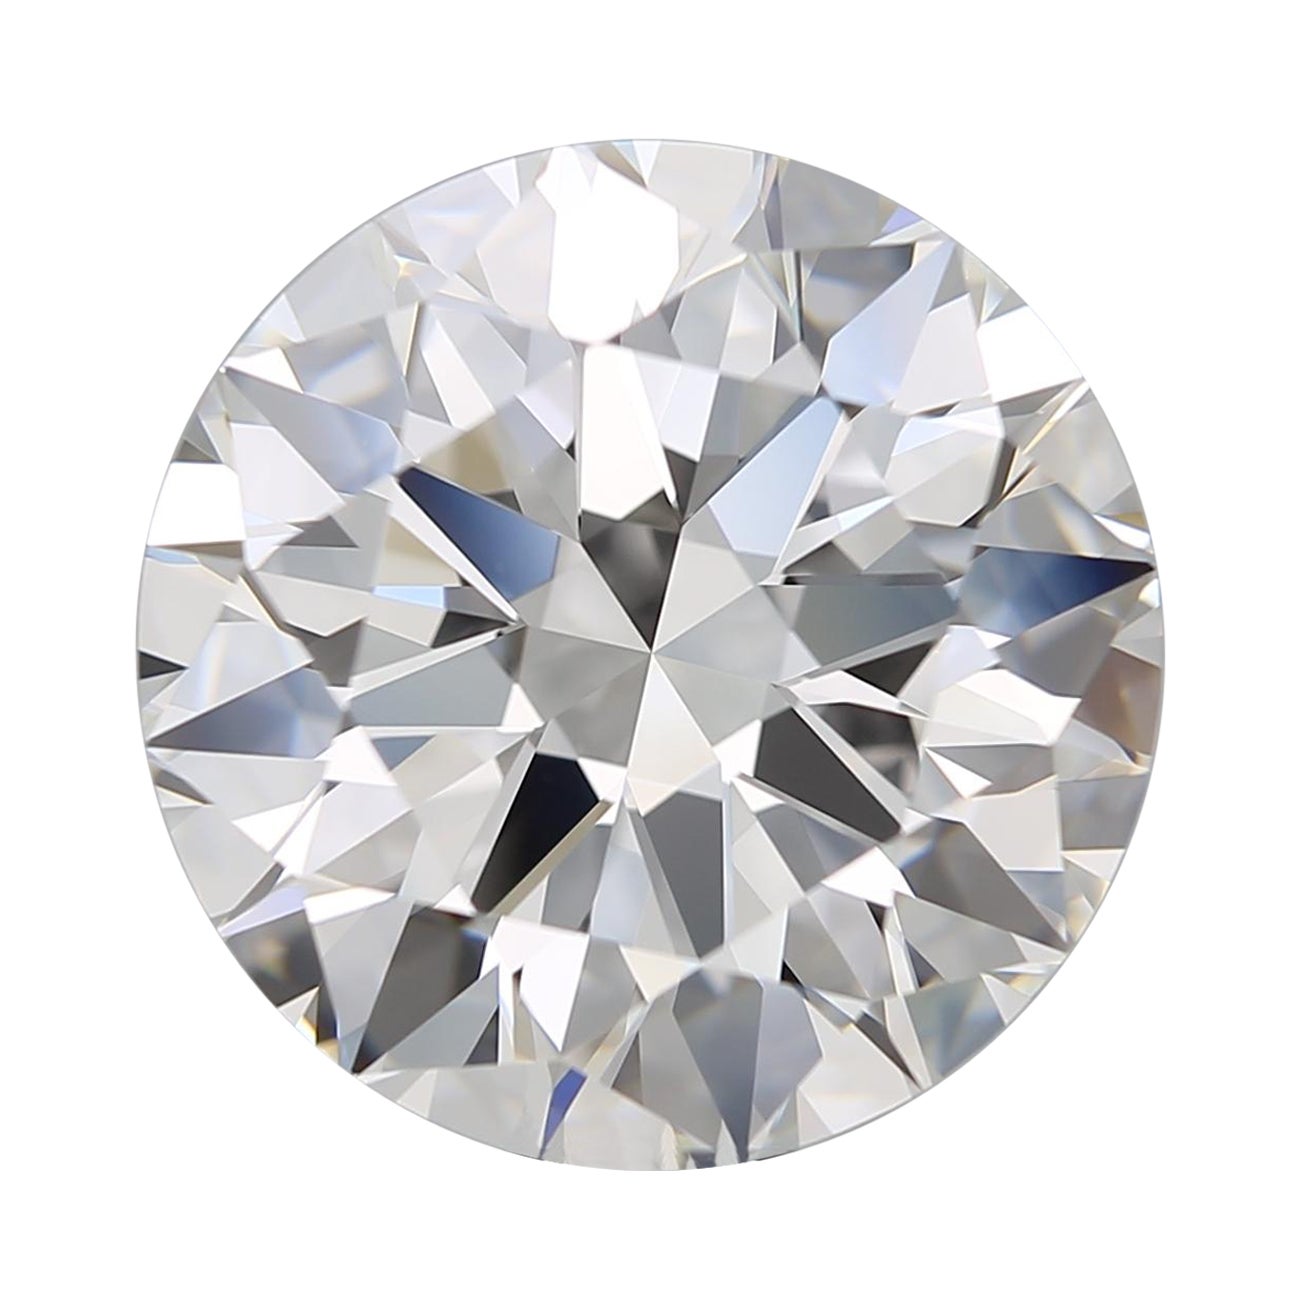  GIA Certified IF Clarity 7.59 Carat Round Brilliant Cut Diamond